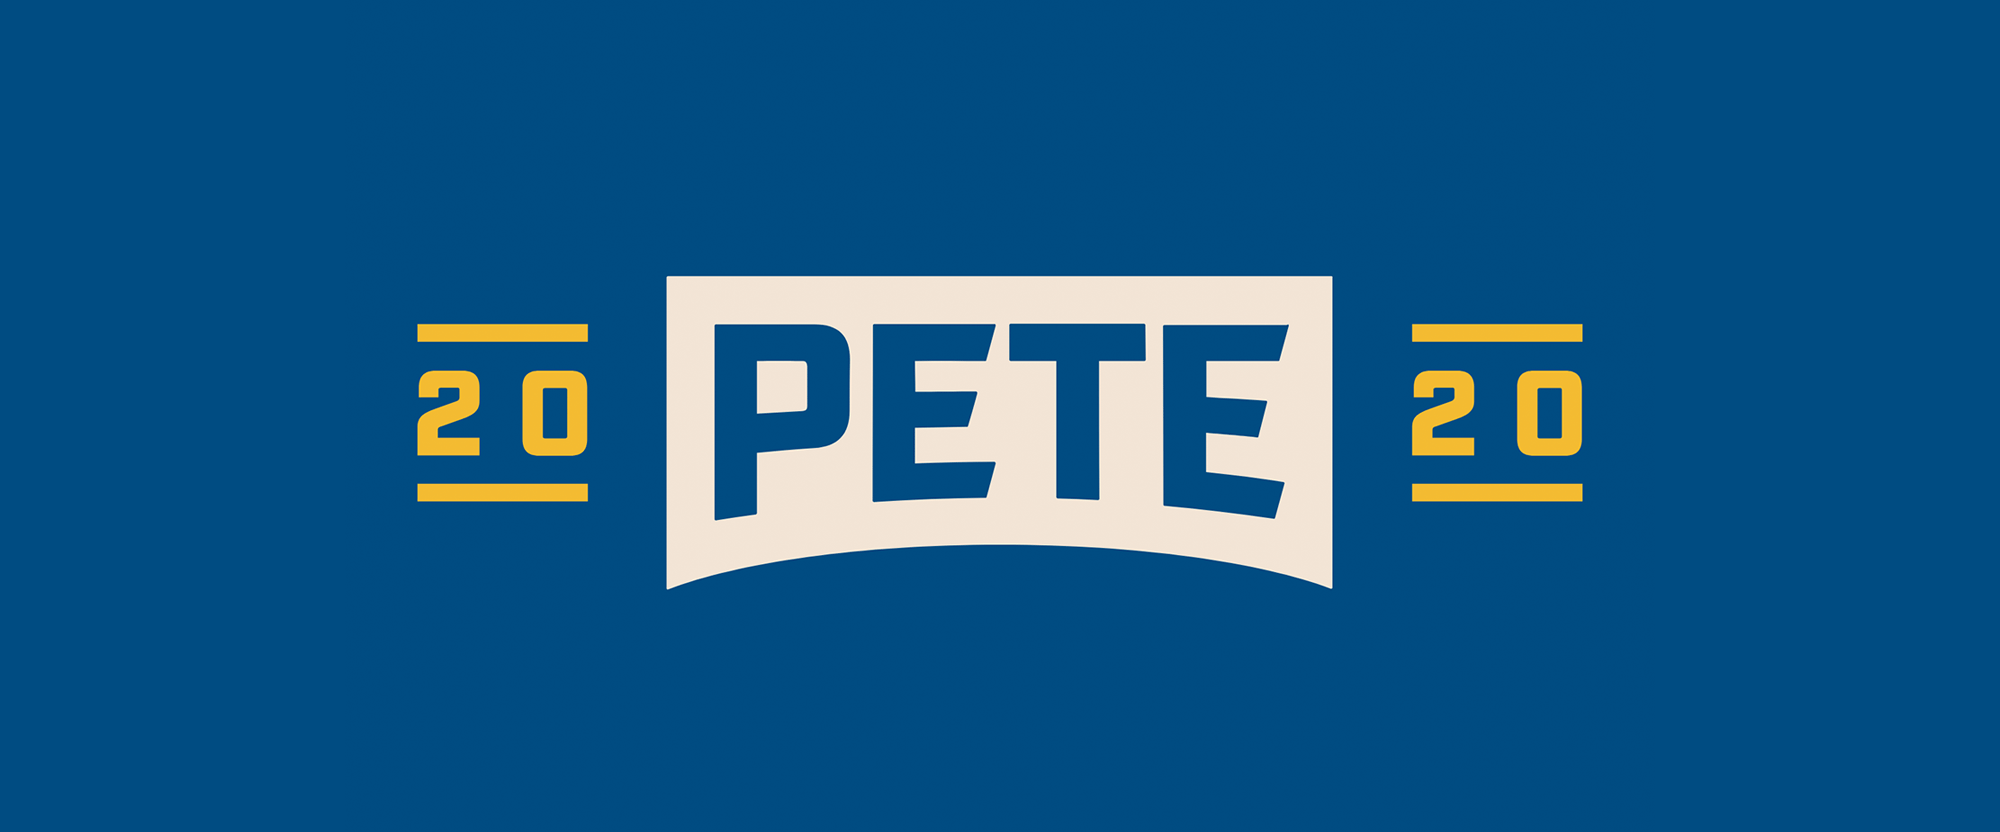 pete_buttigieg_logo_new.png